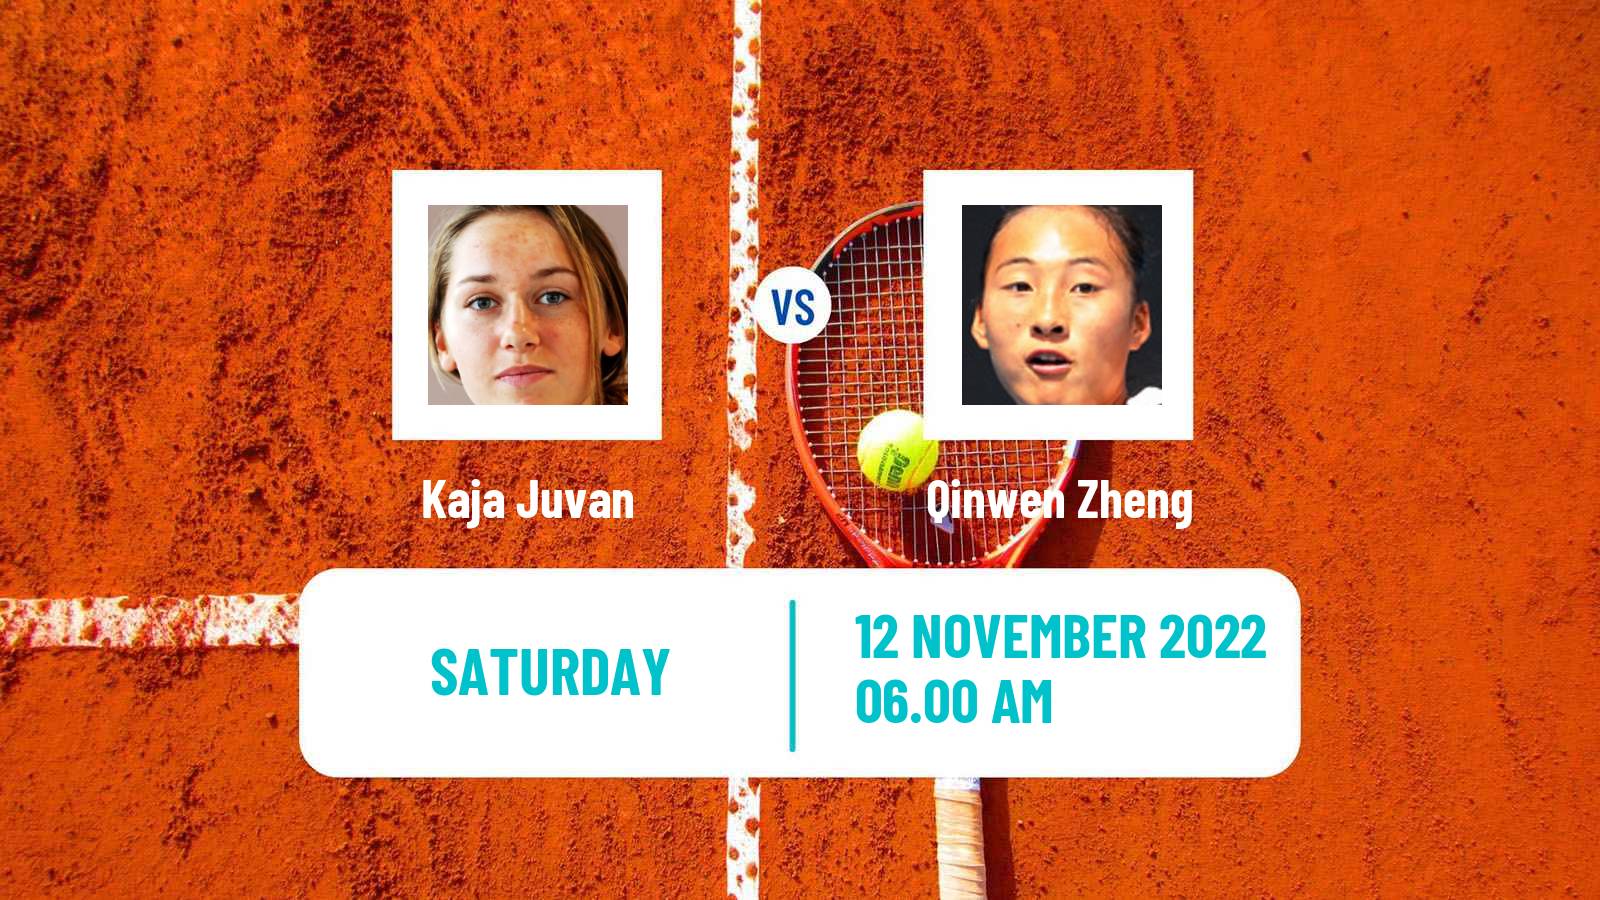 Tennis WTA Billie Jean King Cup World Group Kaja Juvan - Qinwen Zheng